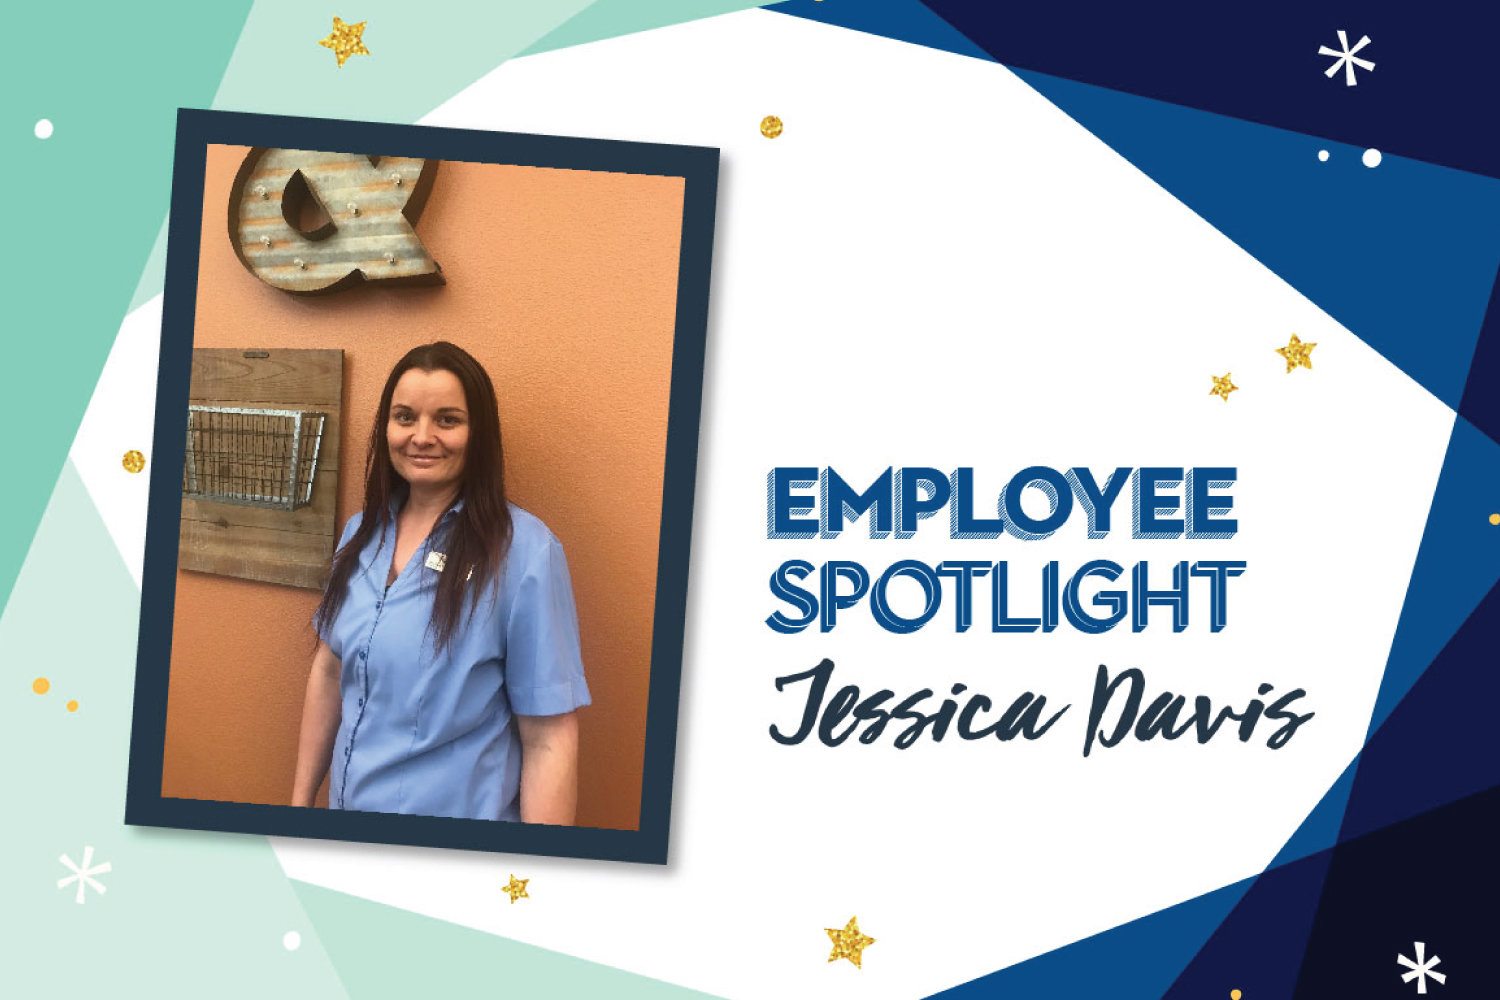 Employee Spotlight: Jessica Davis